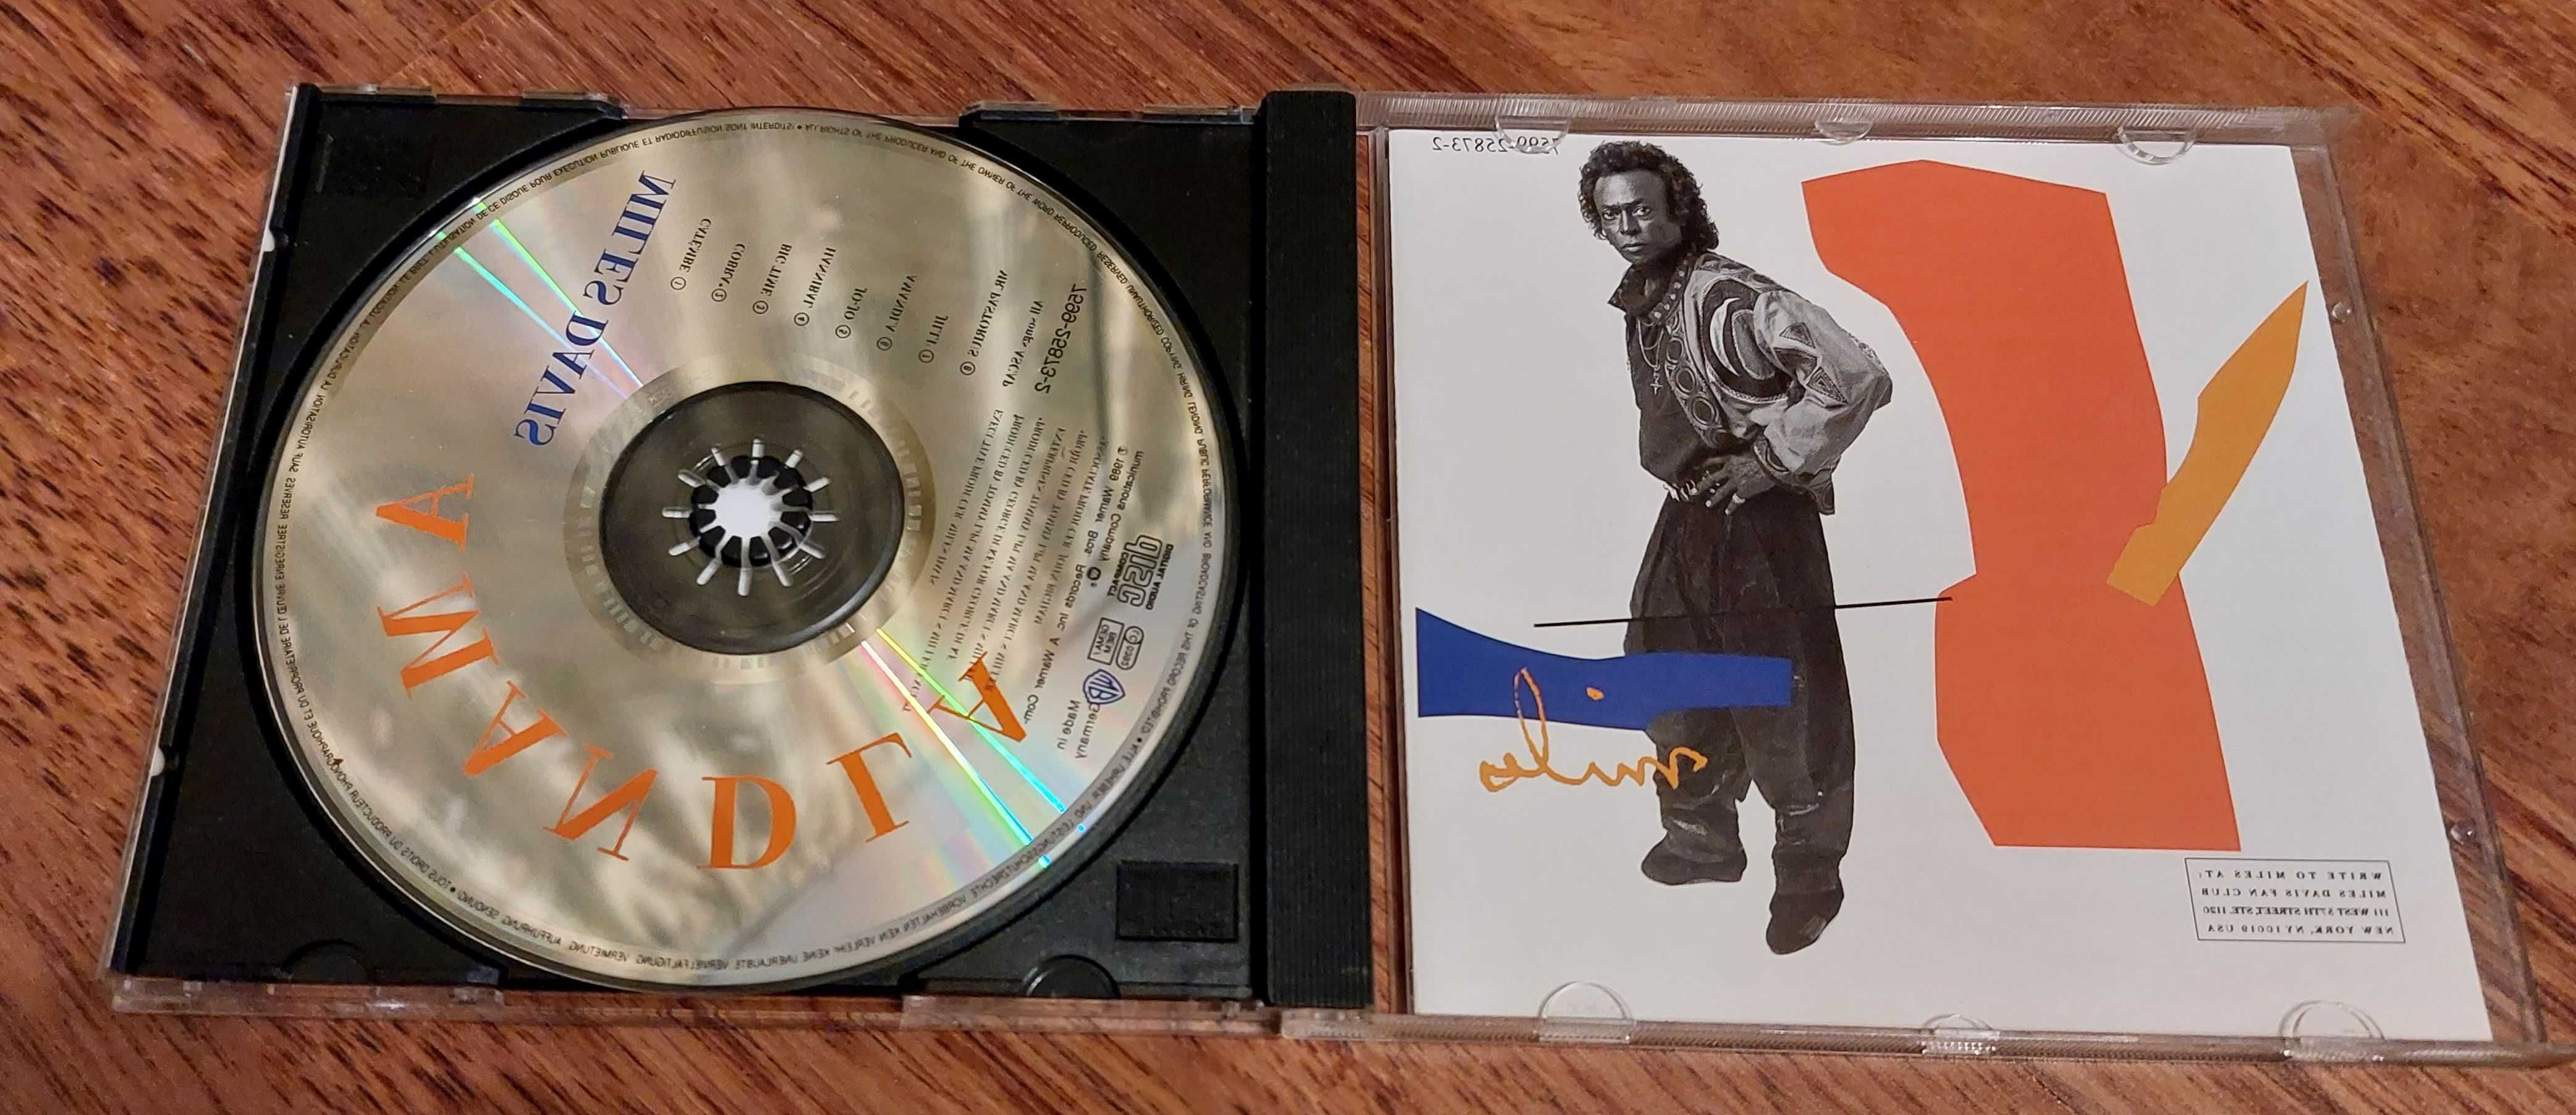 CD Amandla Miles Davis